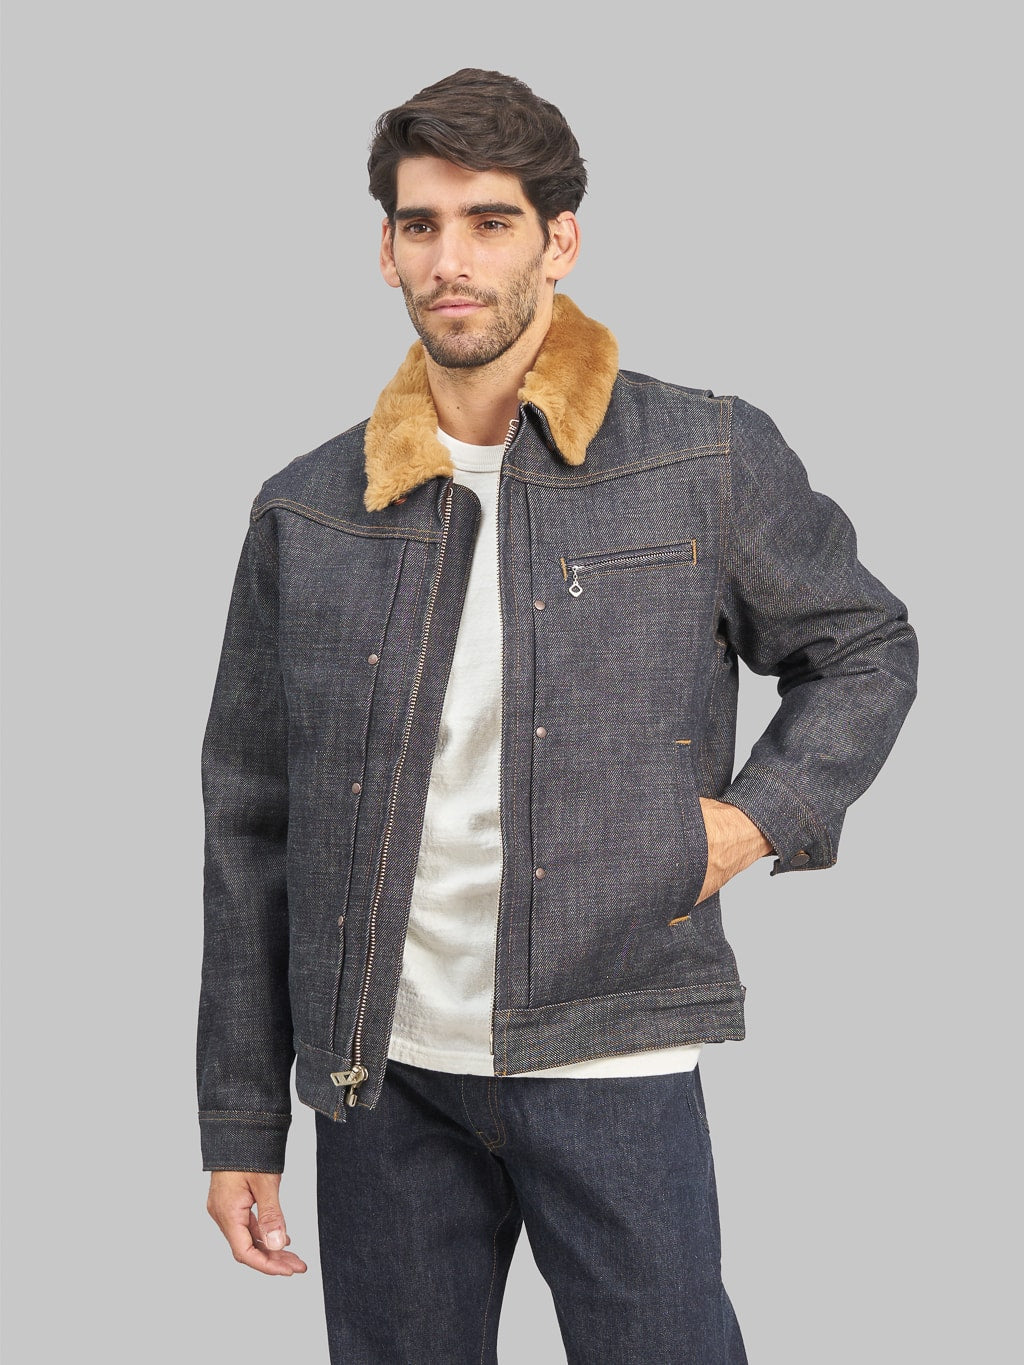 Freenote Cloth Denim Shearling Jacket warmth robust fit